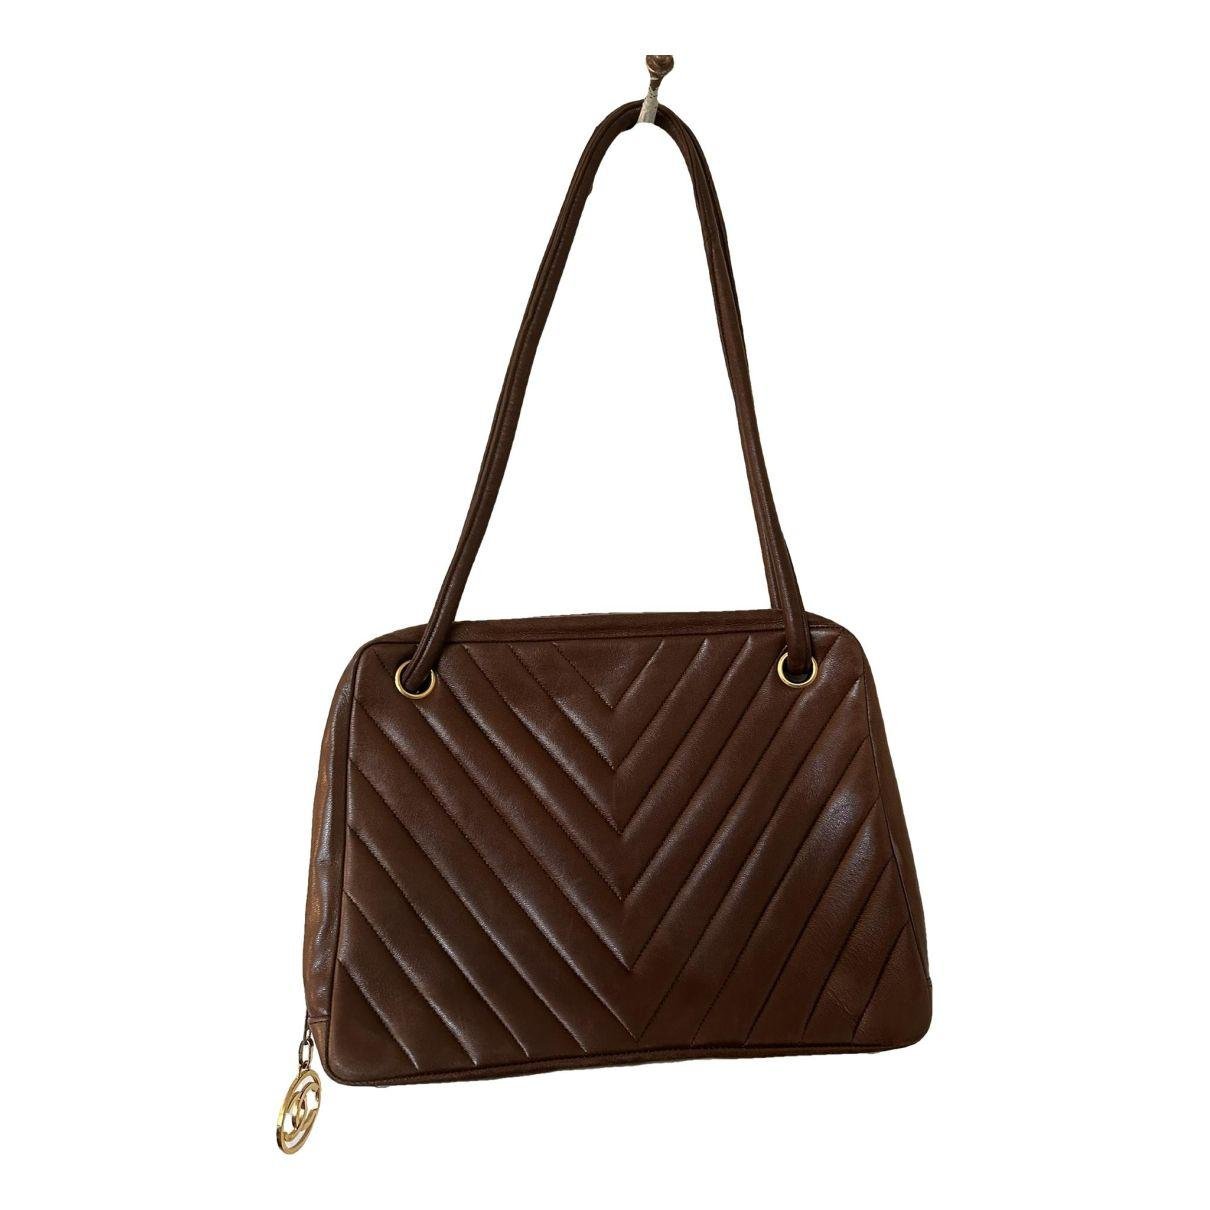 Leather handbag by CHANEL